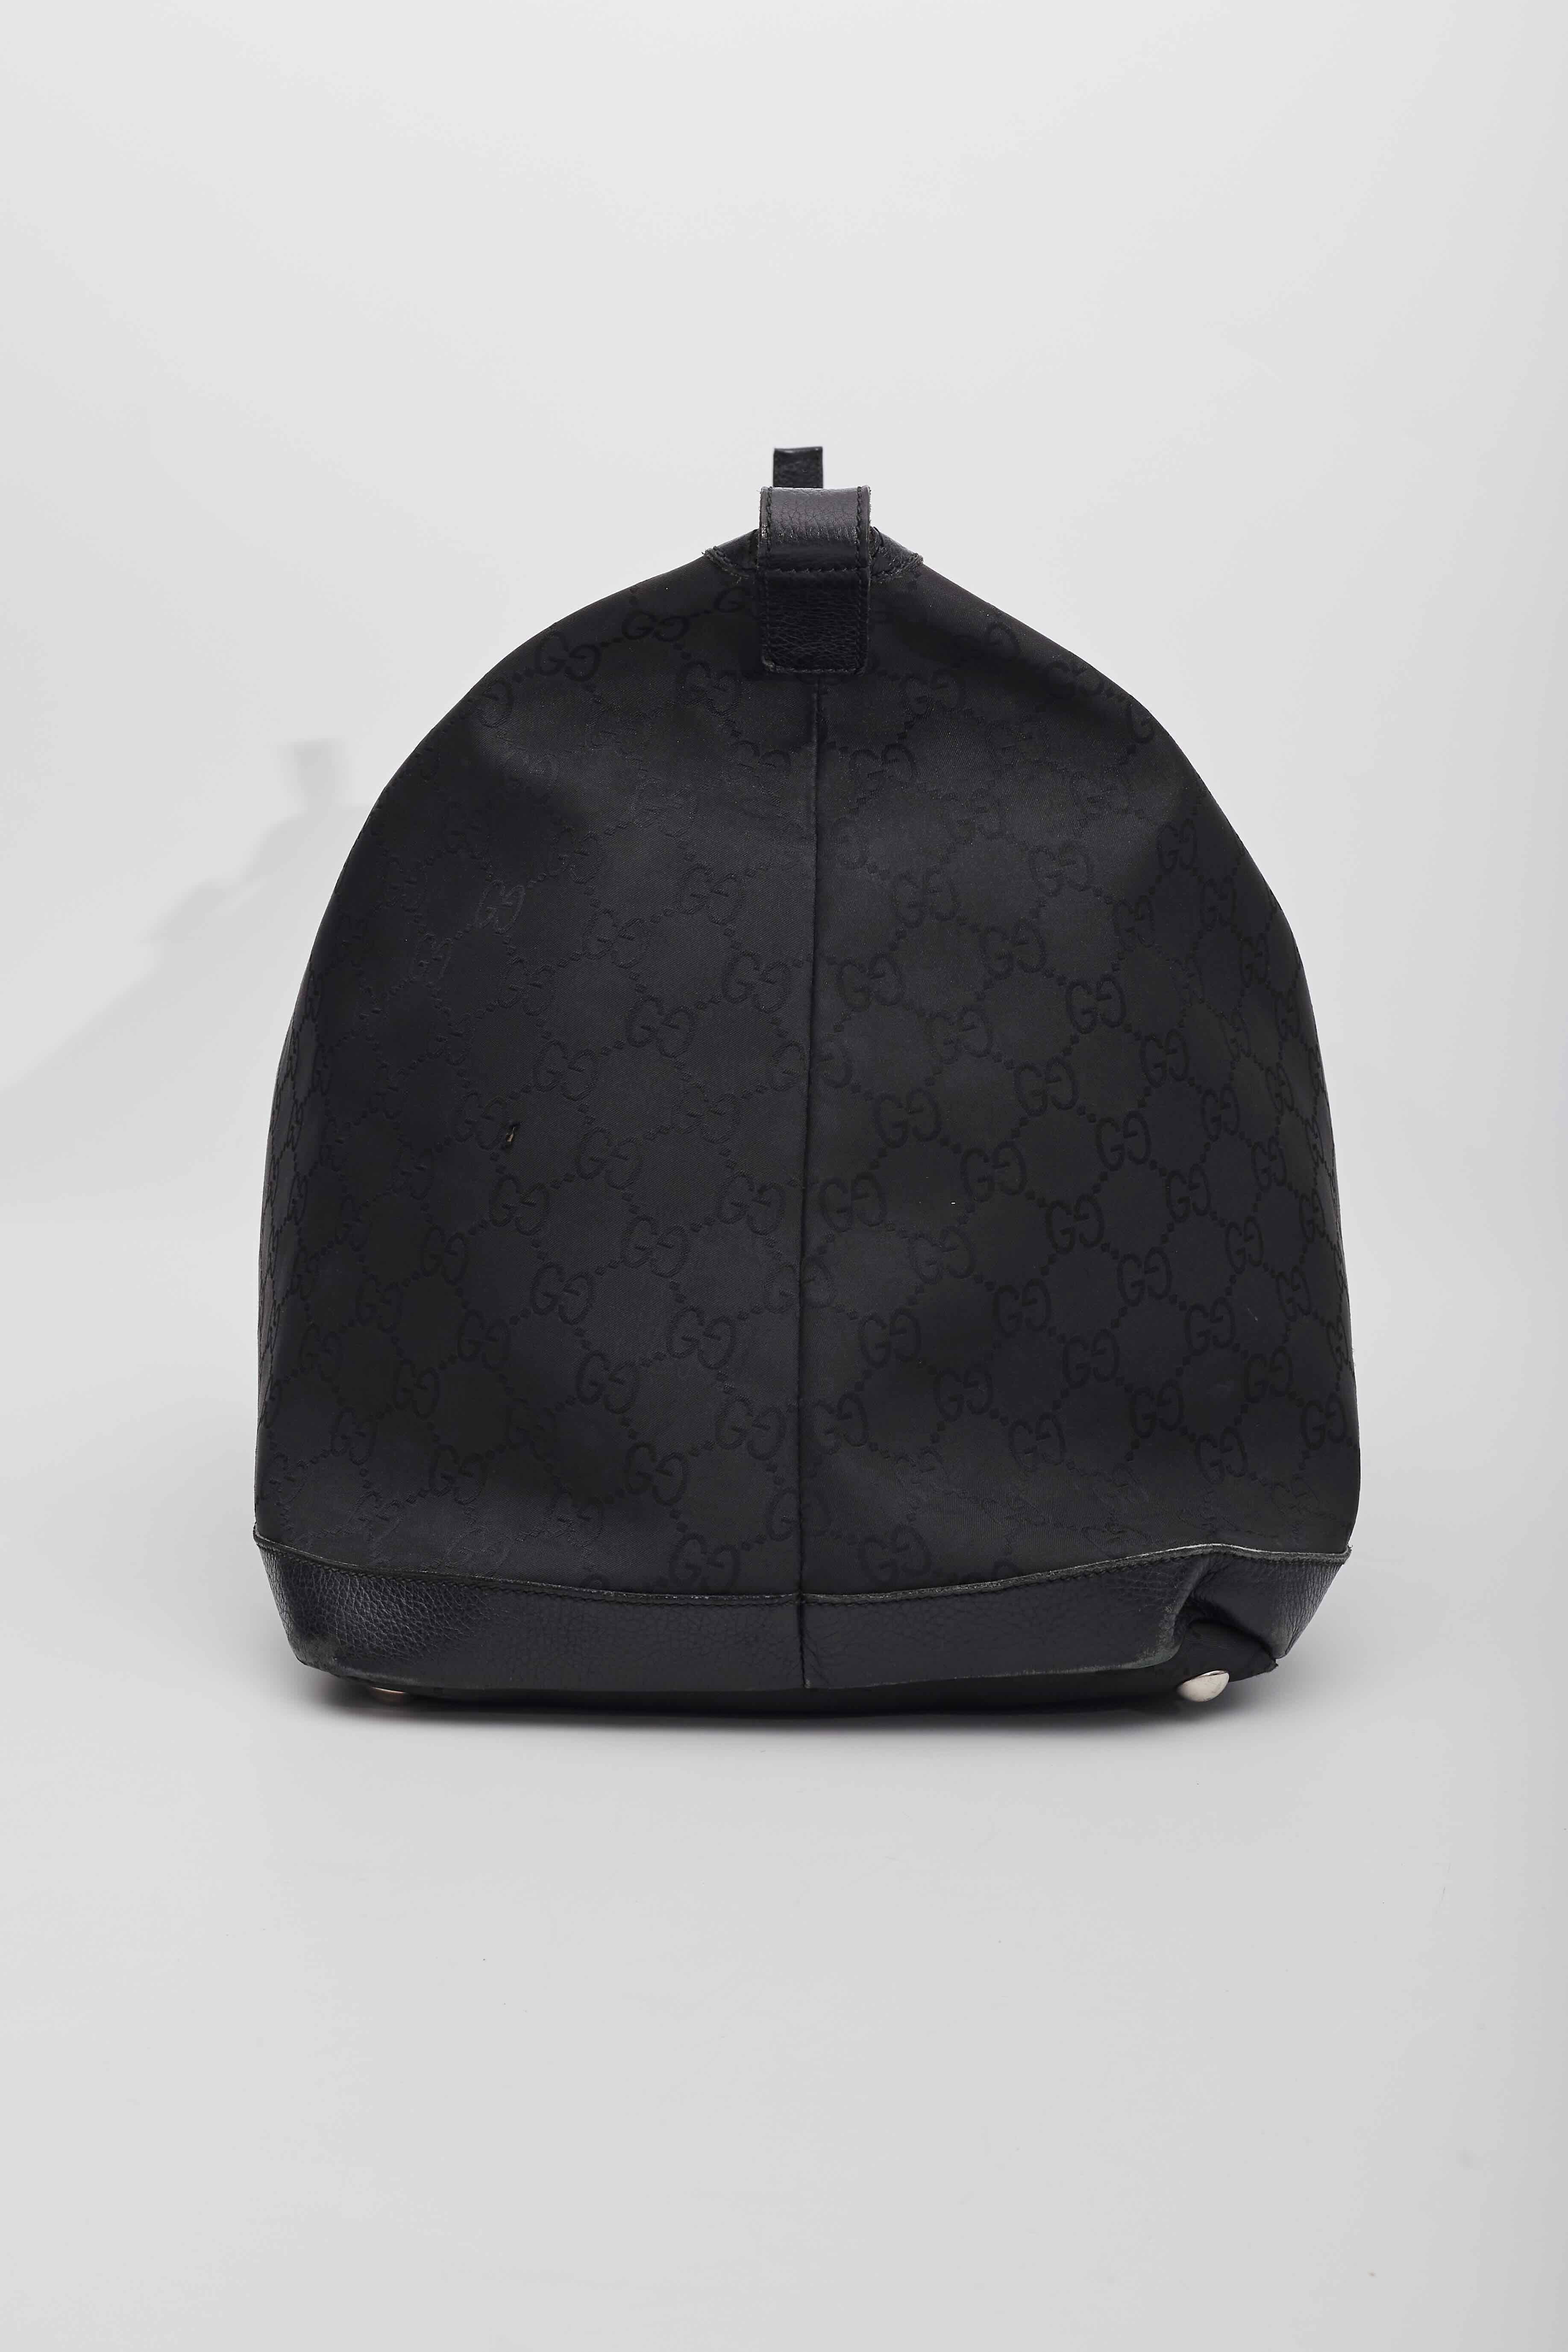 Gucci Nylon Black Monogram Hobo 48hr Travel Bag Large  Bon état - En vente à Montreal, Quebec